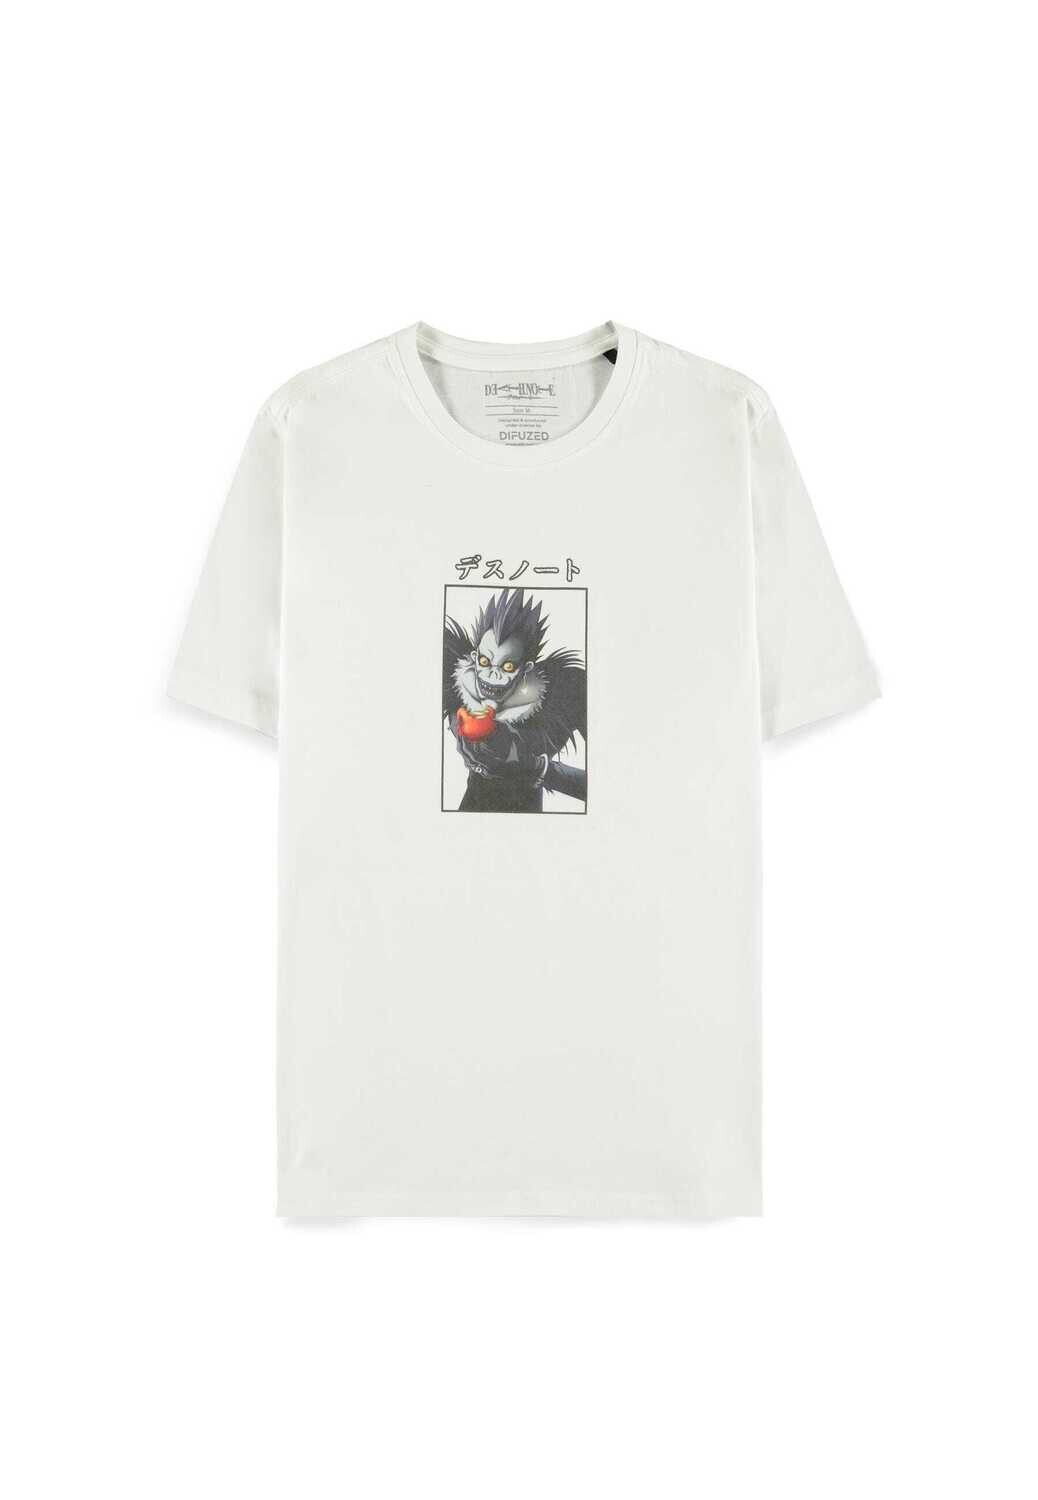 Death Note - Ryuk Men's Short Sleeved T-shirt